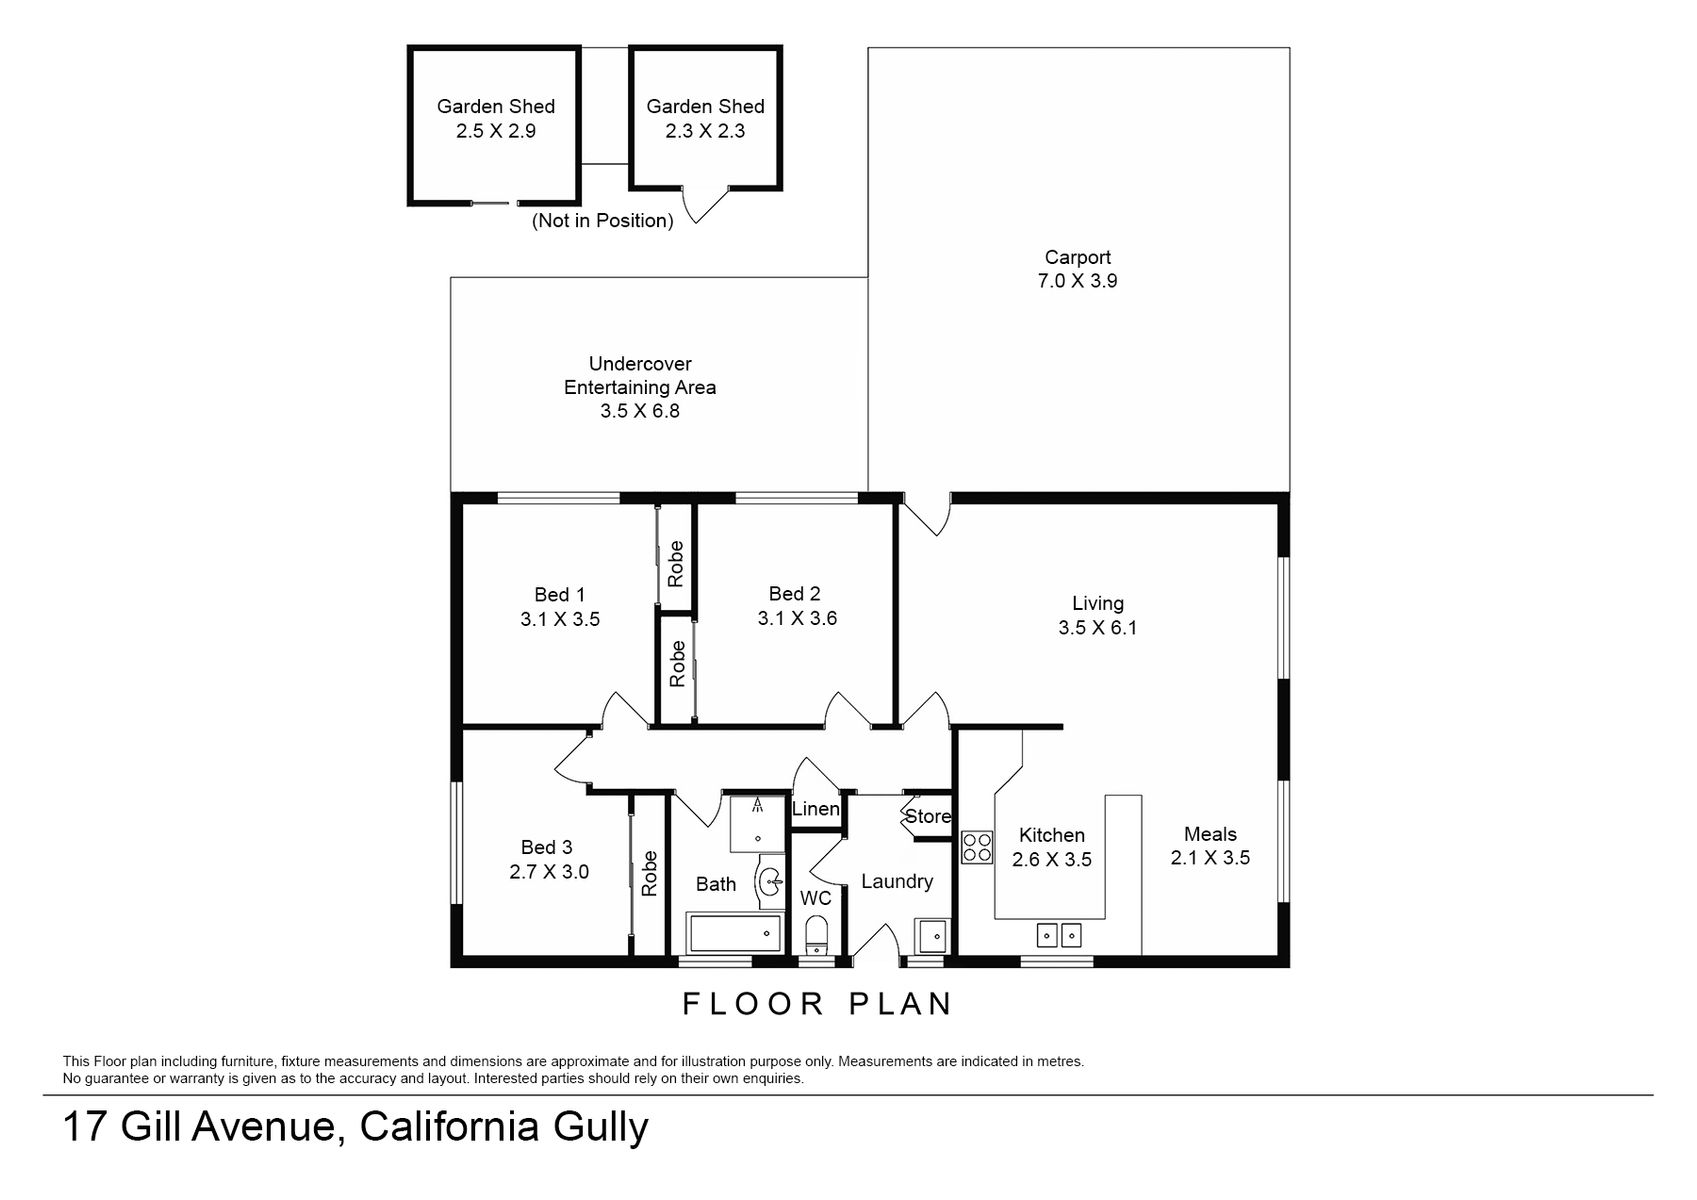 17 Gill Avenue floor plan